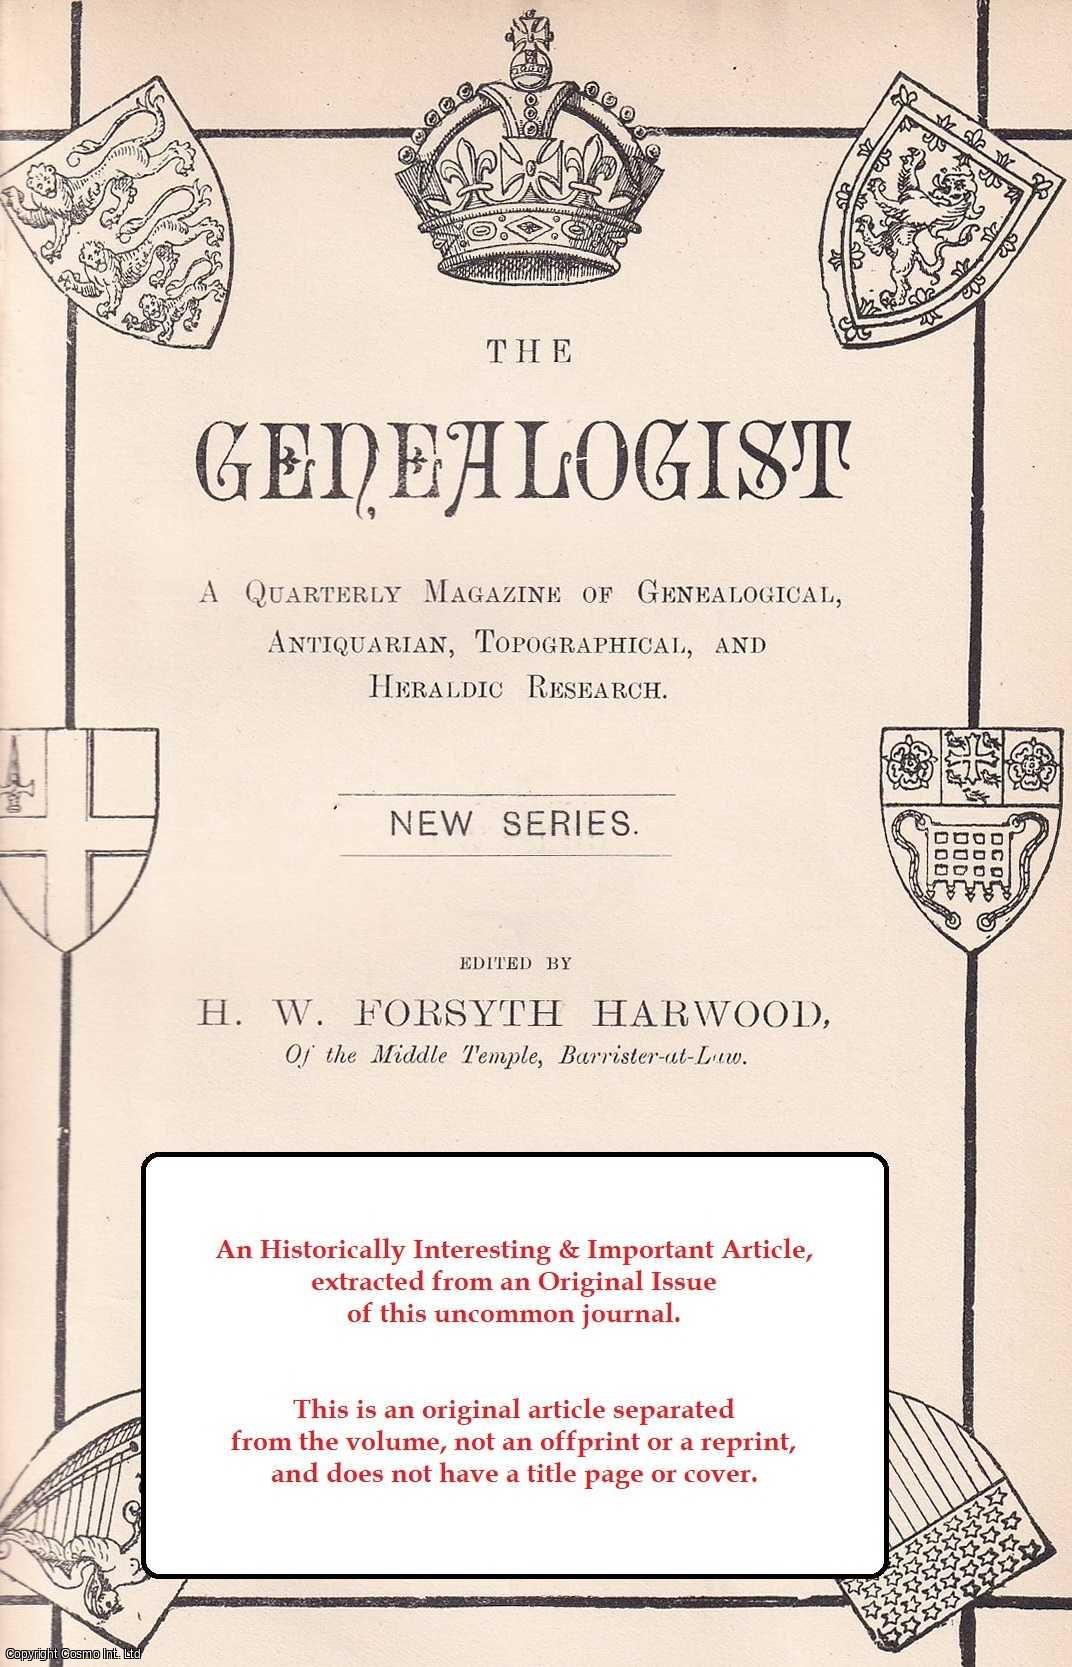 G. E. C. - Pedigree of Castillion. An original article from The Genealogist, 1900.